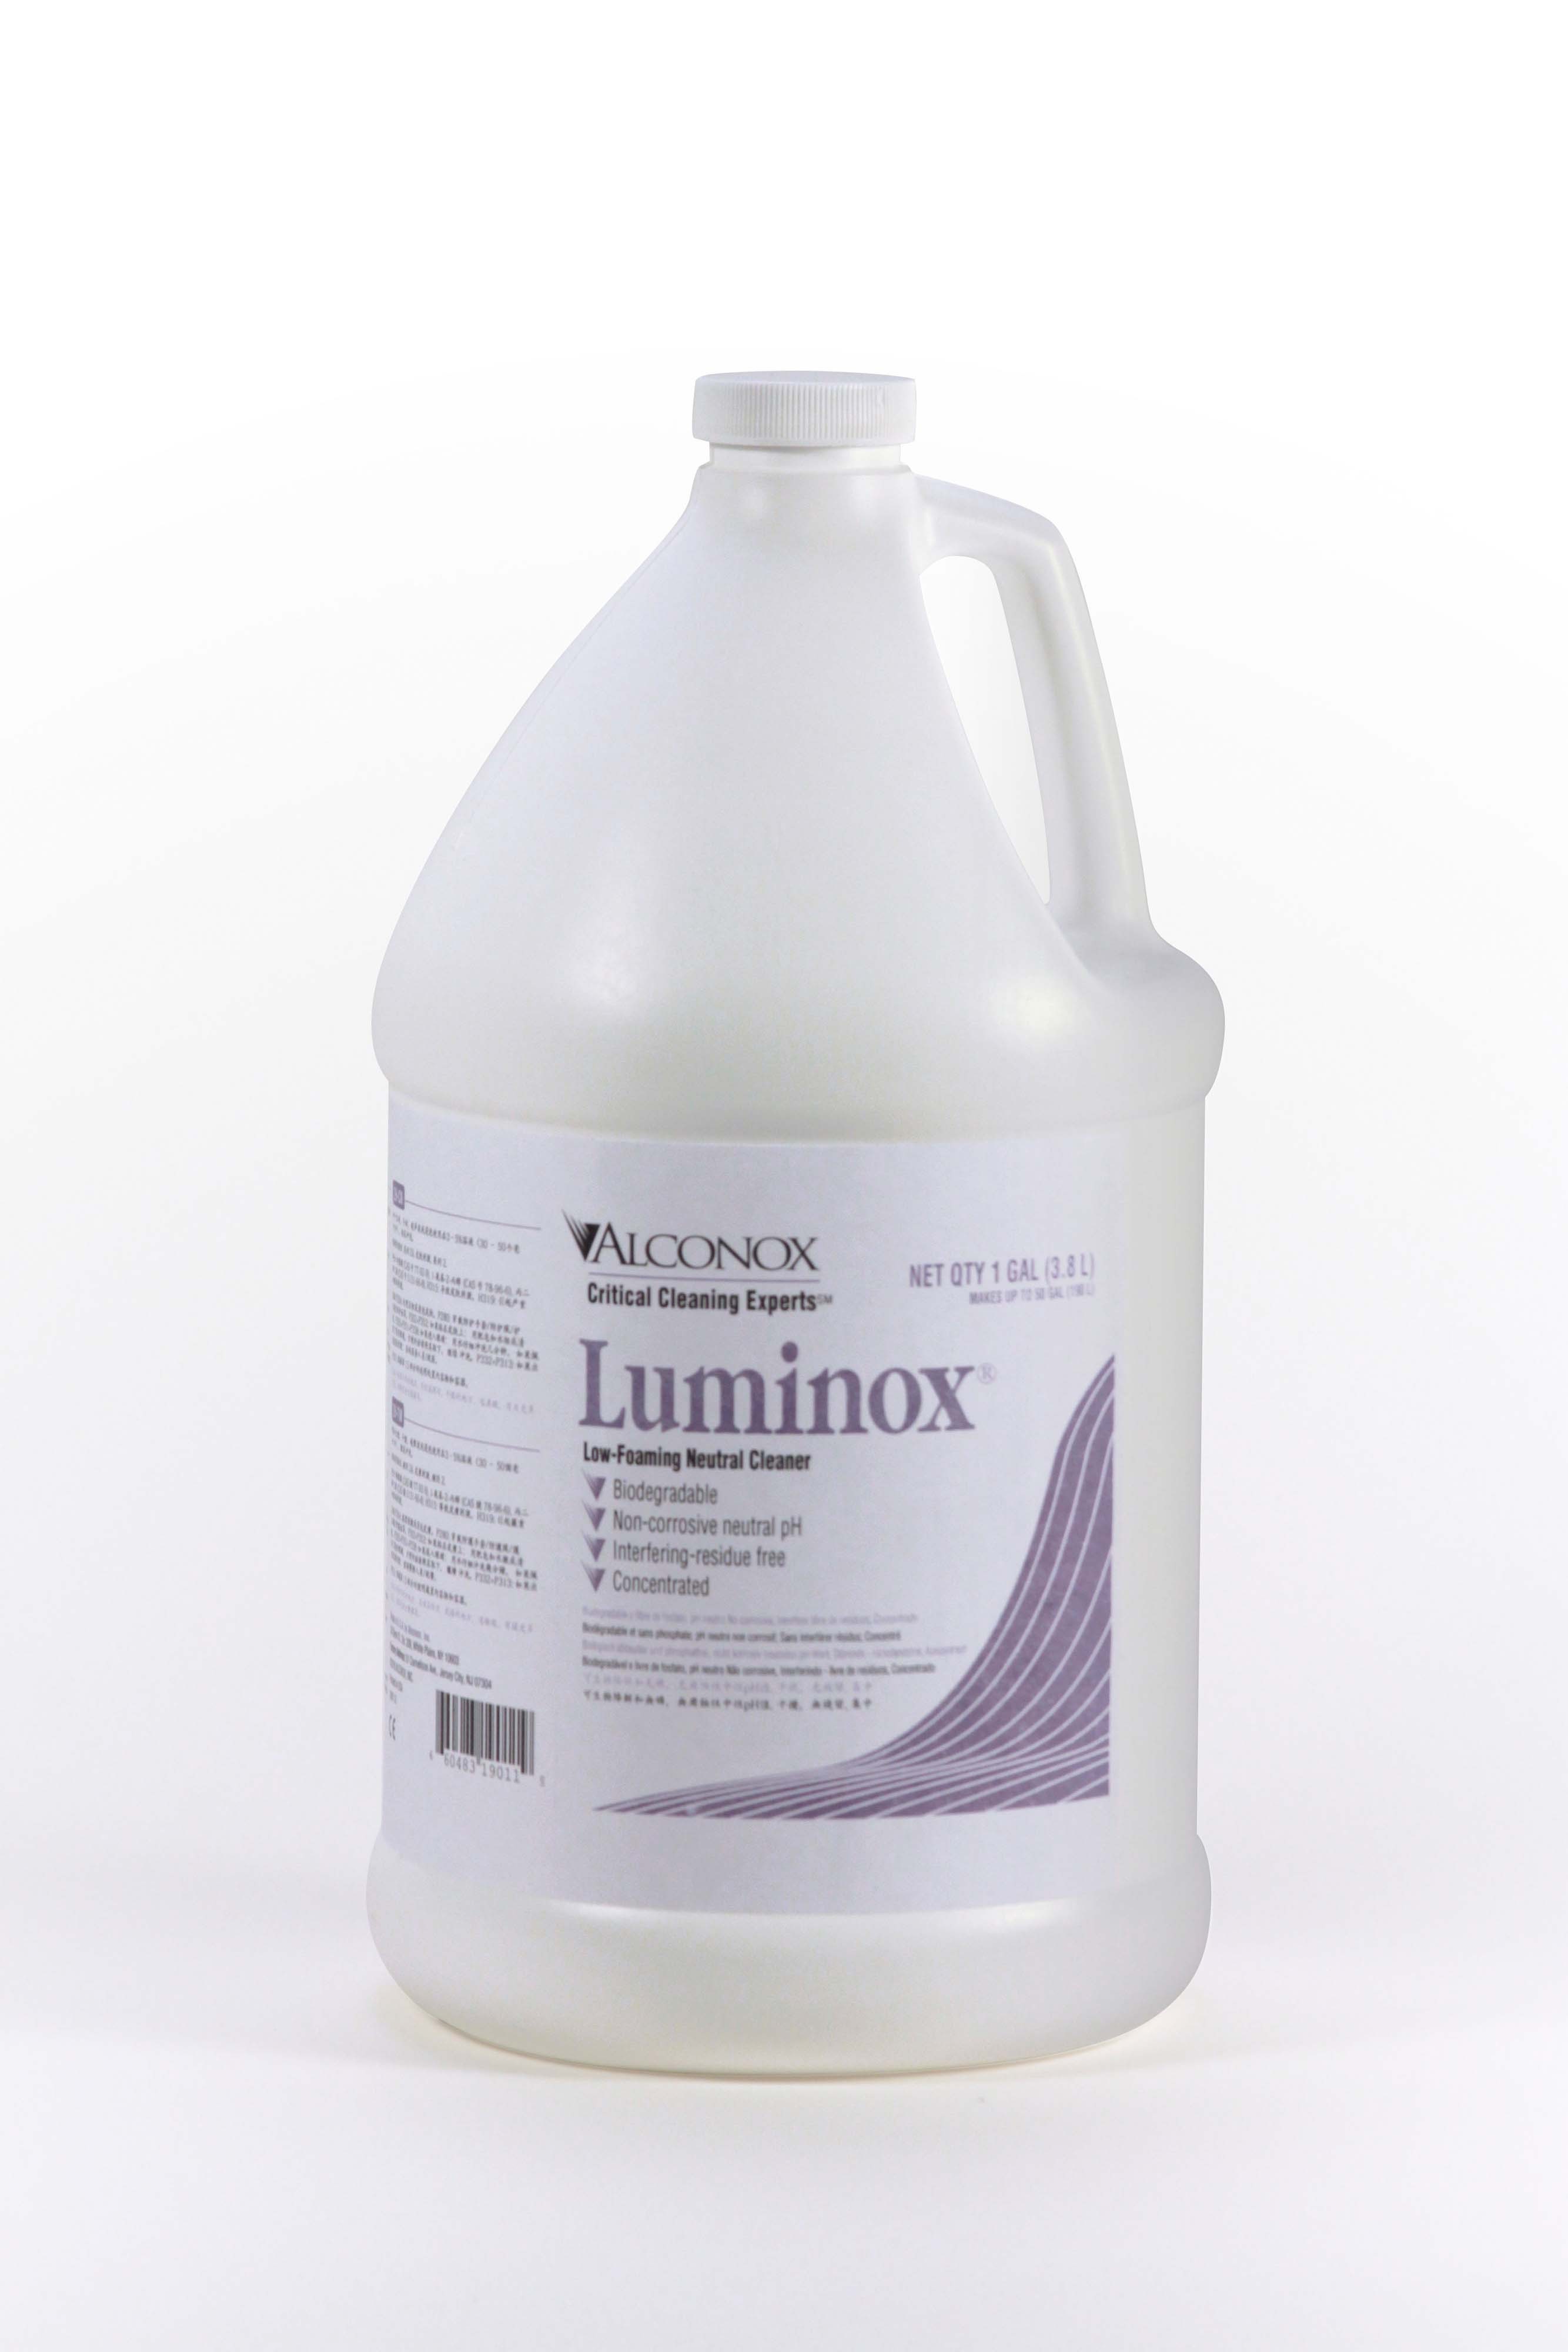 Luminox Low-Foaming Neutral pH Liquid Detergent - 4x1 gal case